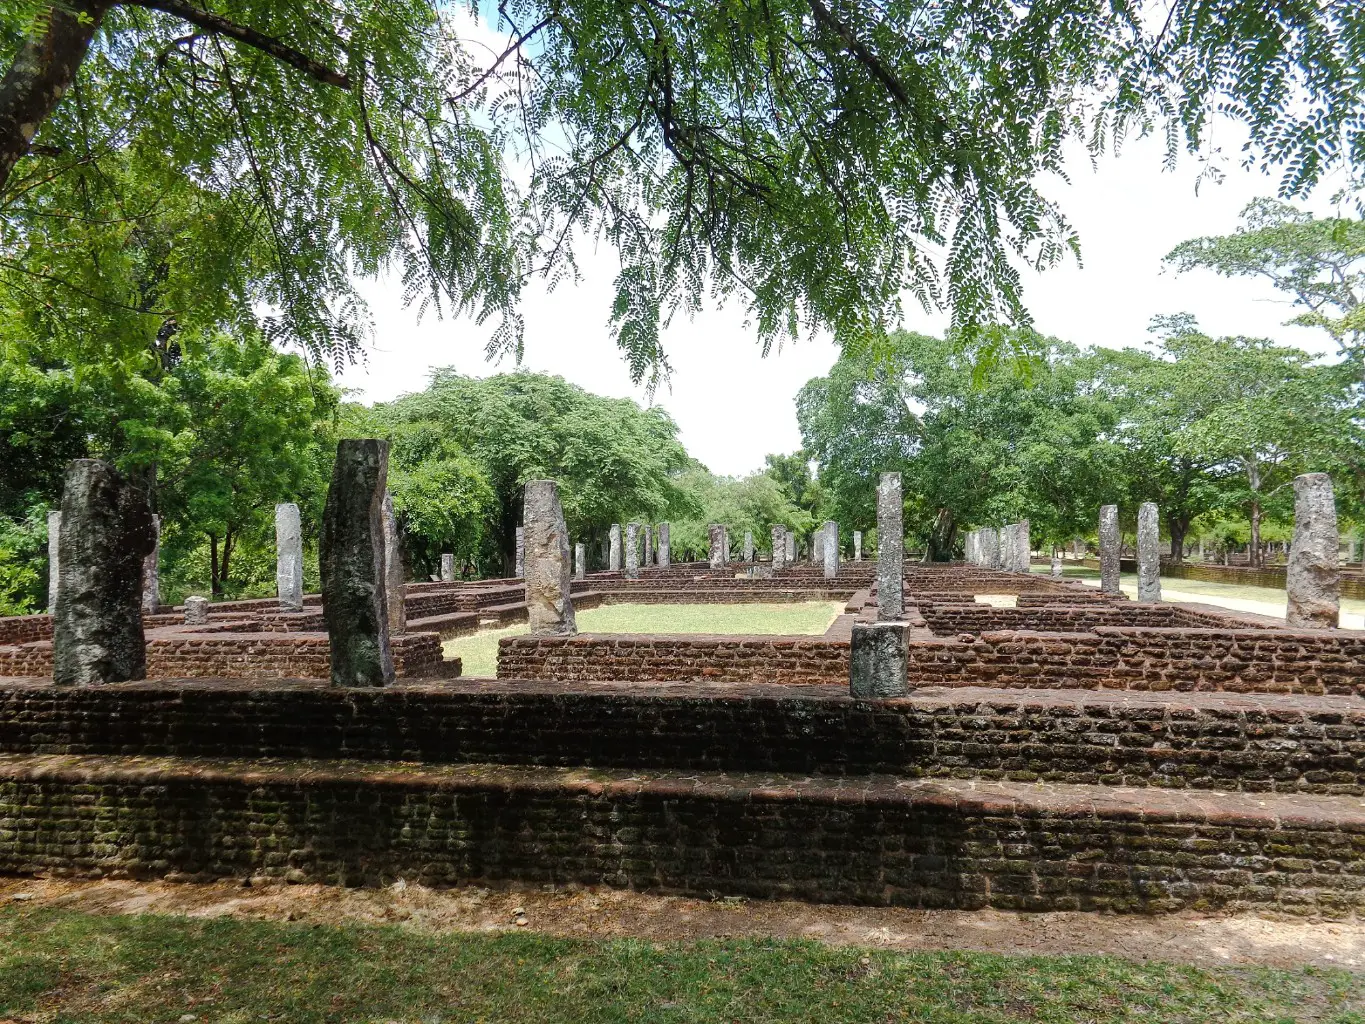 Monastic-Hospital-Ancient-City-of-Polonnaruwa-1-1